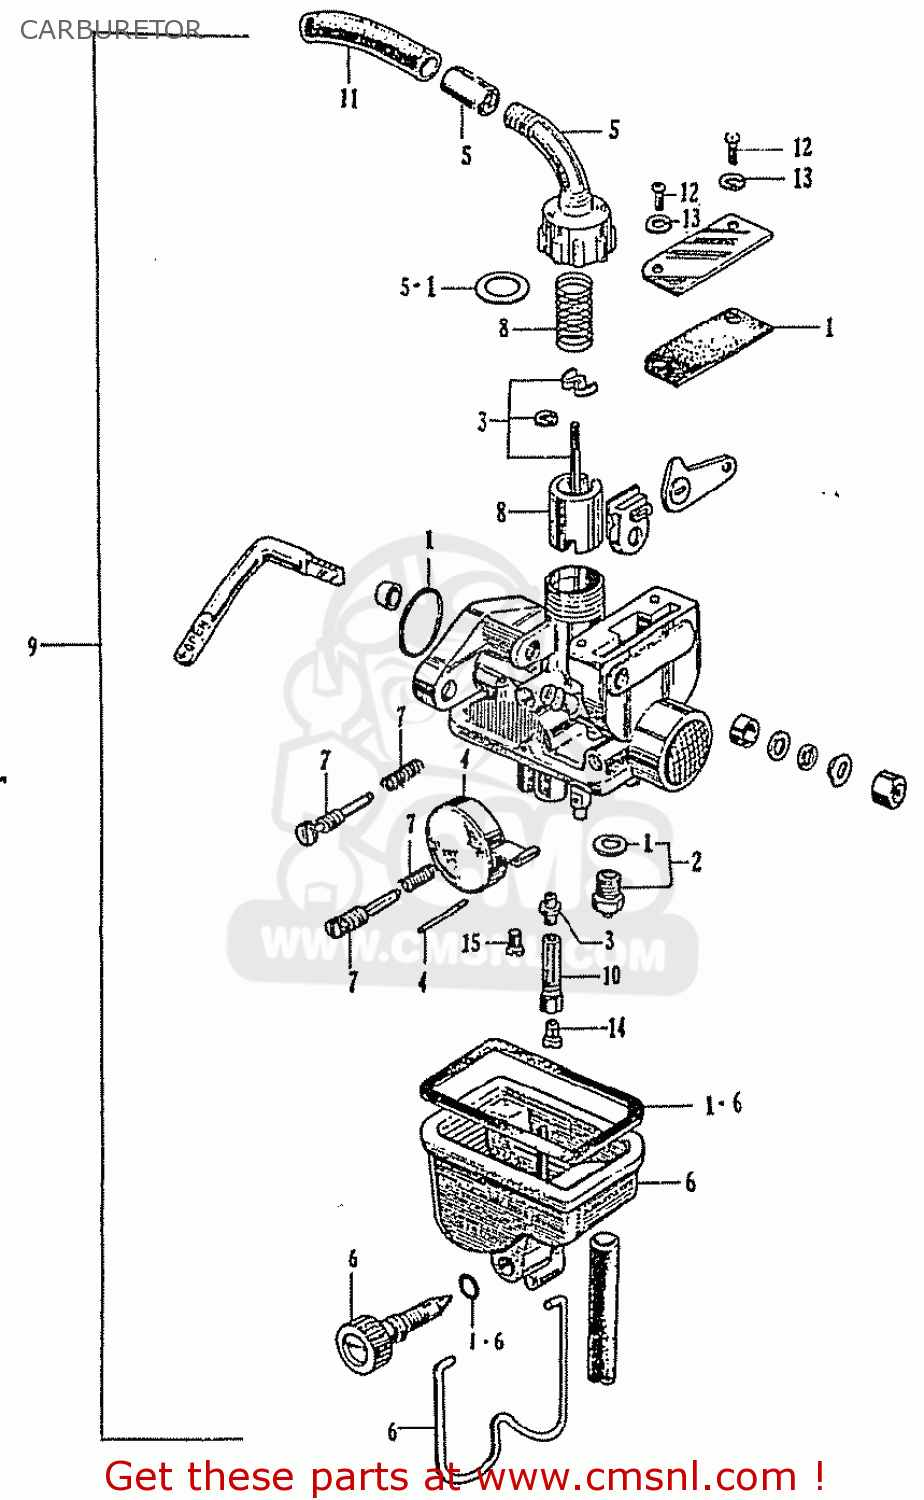 Honda z50 carburetor adjustment #4